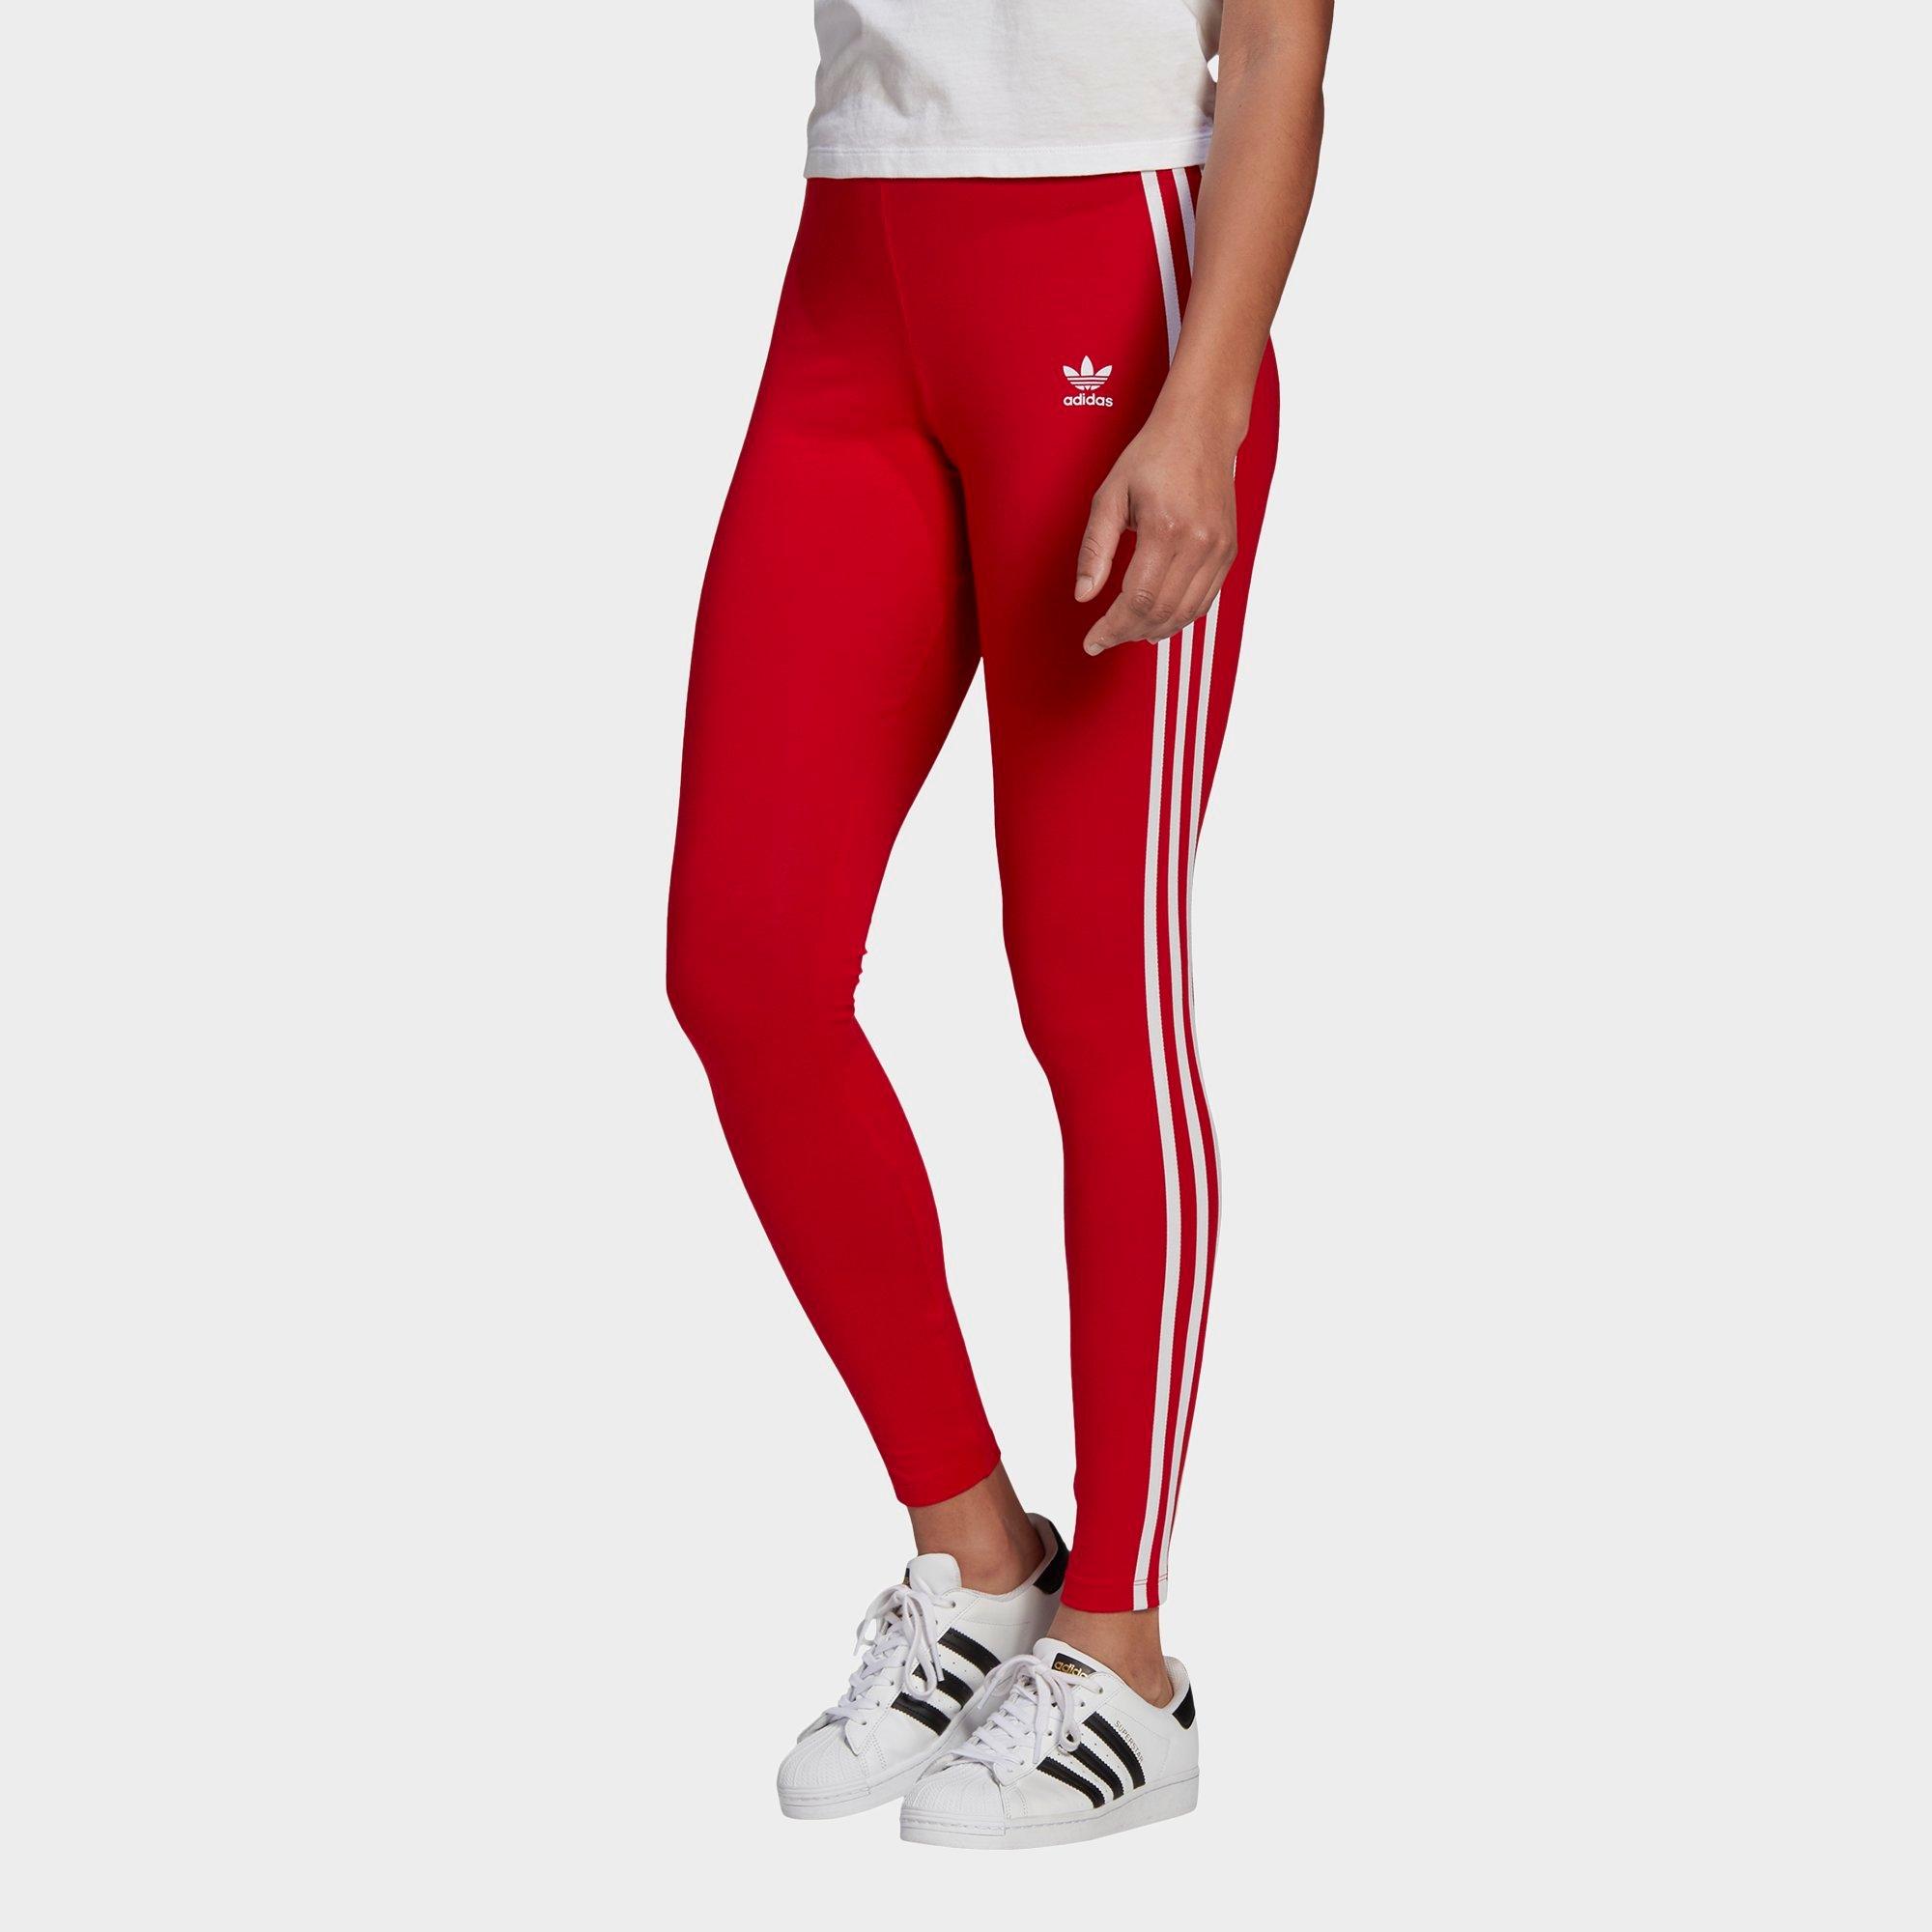 jd sports ladies adidas leggings